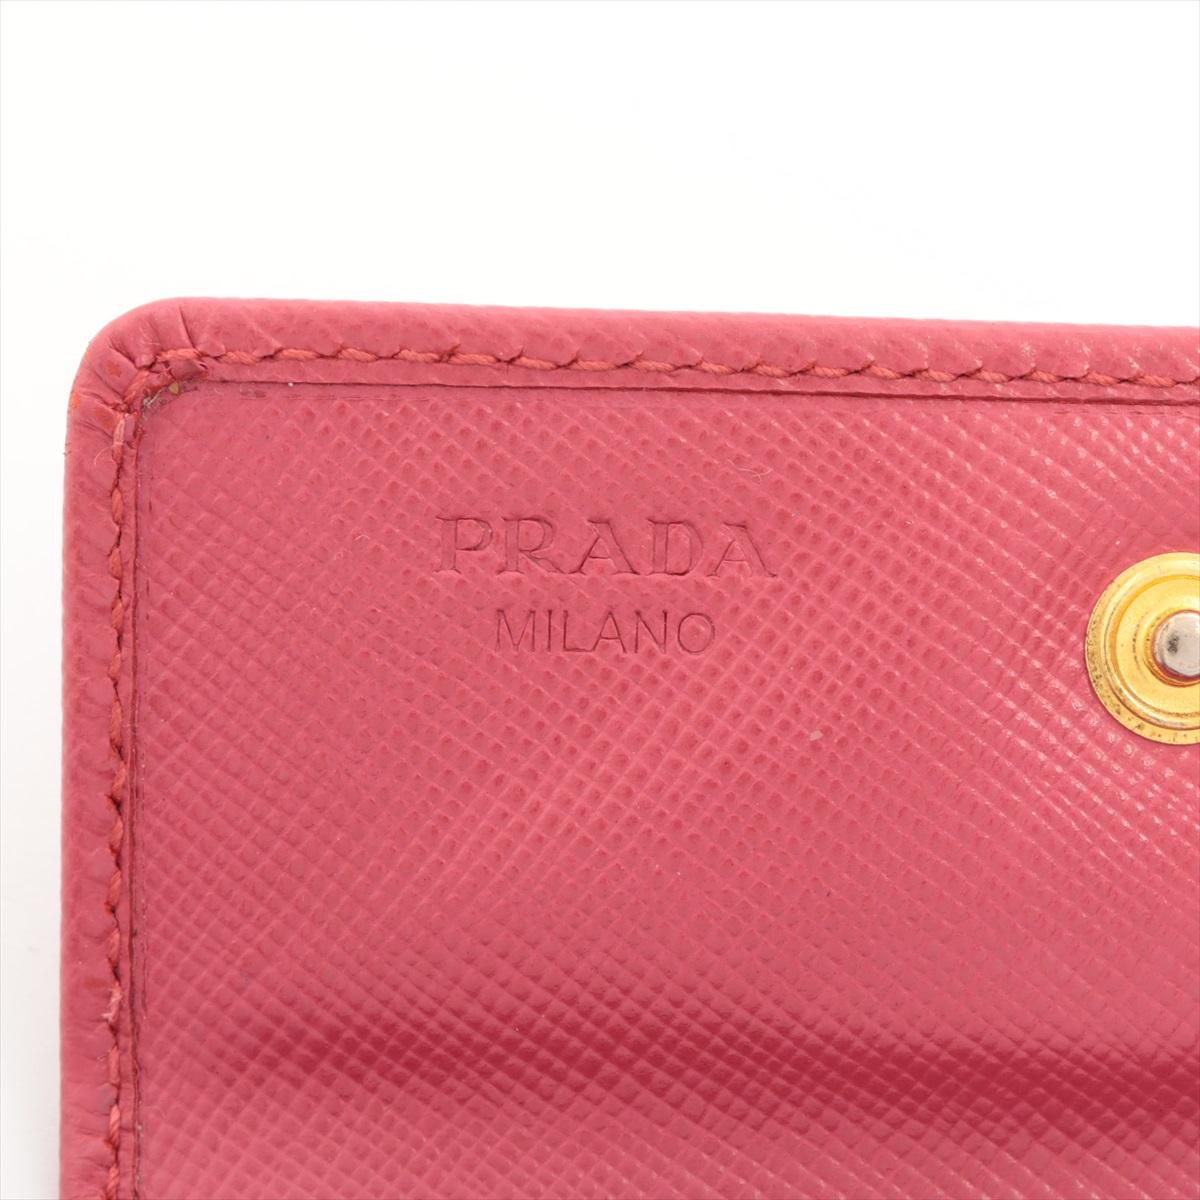 Prada Saffiano Leather Card Case Pink For Sale 2